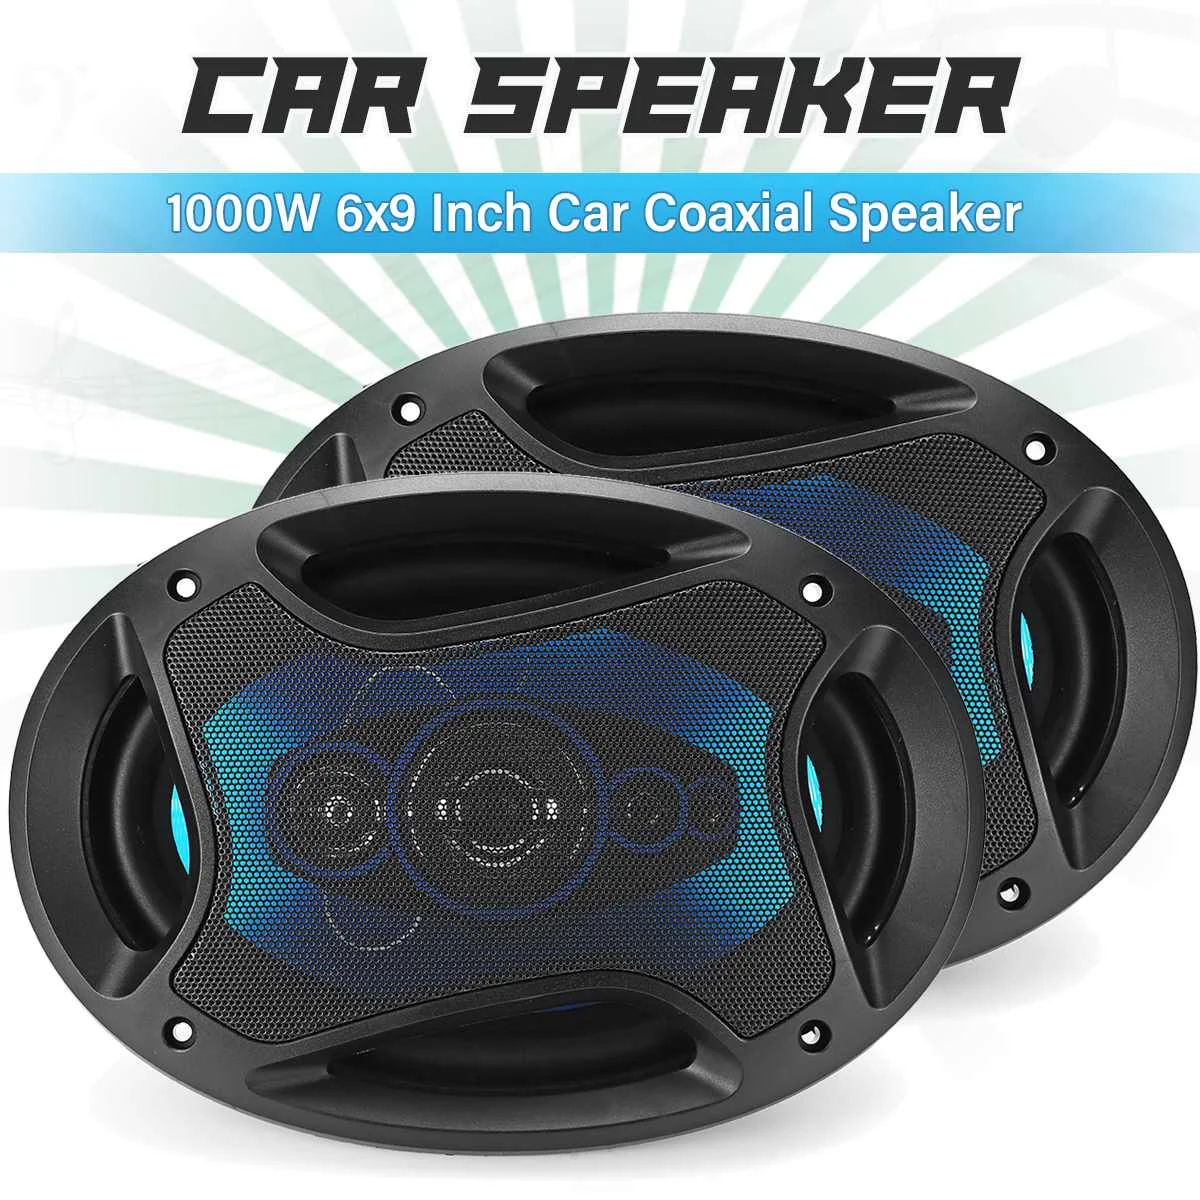 

12V 1000W 6x9 inch 2-way Car Coaxial Speaker Auto Vehicle Audio Tweeter Loundspeaker Music Stereo Sub Woofer Speakers